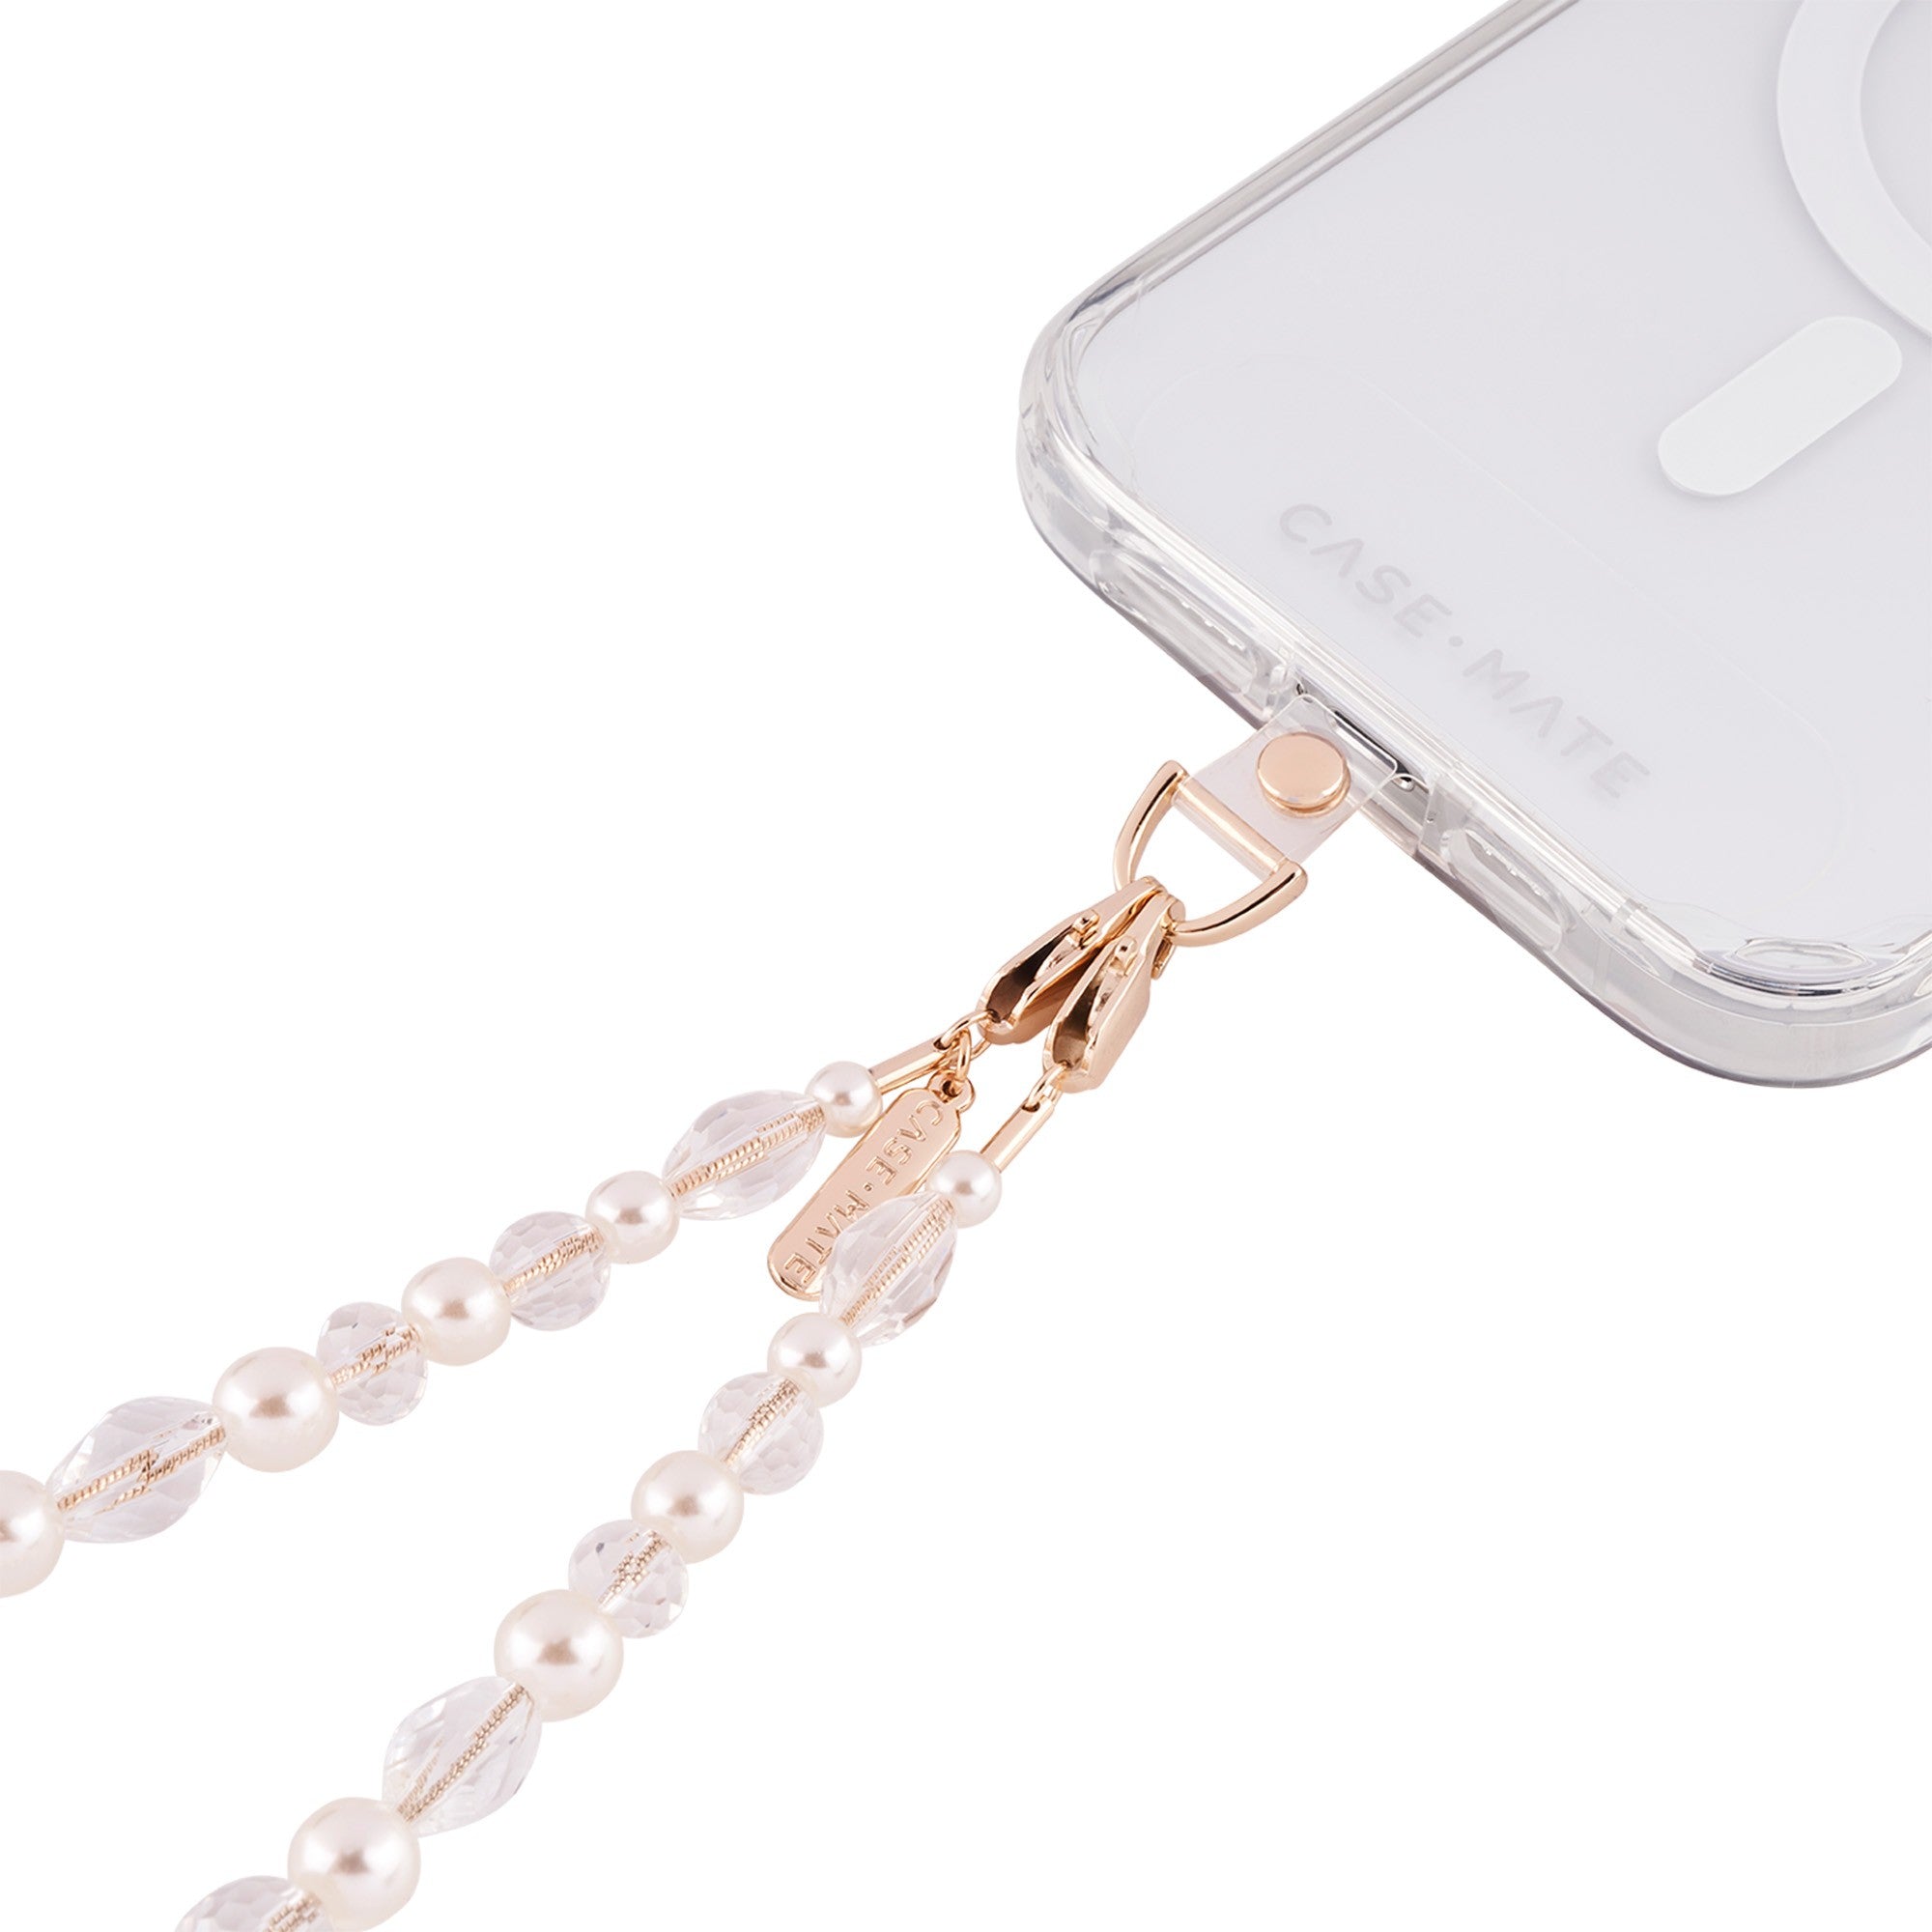 Universal Case-Mate Beaded Phone Wristlet - Crystal Pearl - 15-11273